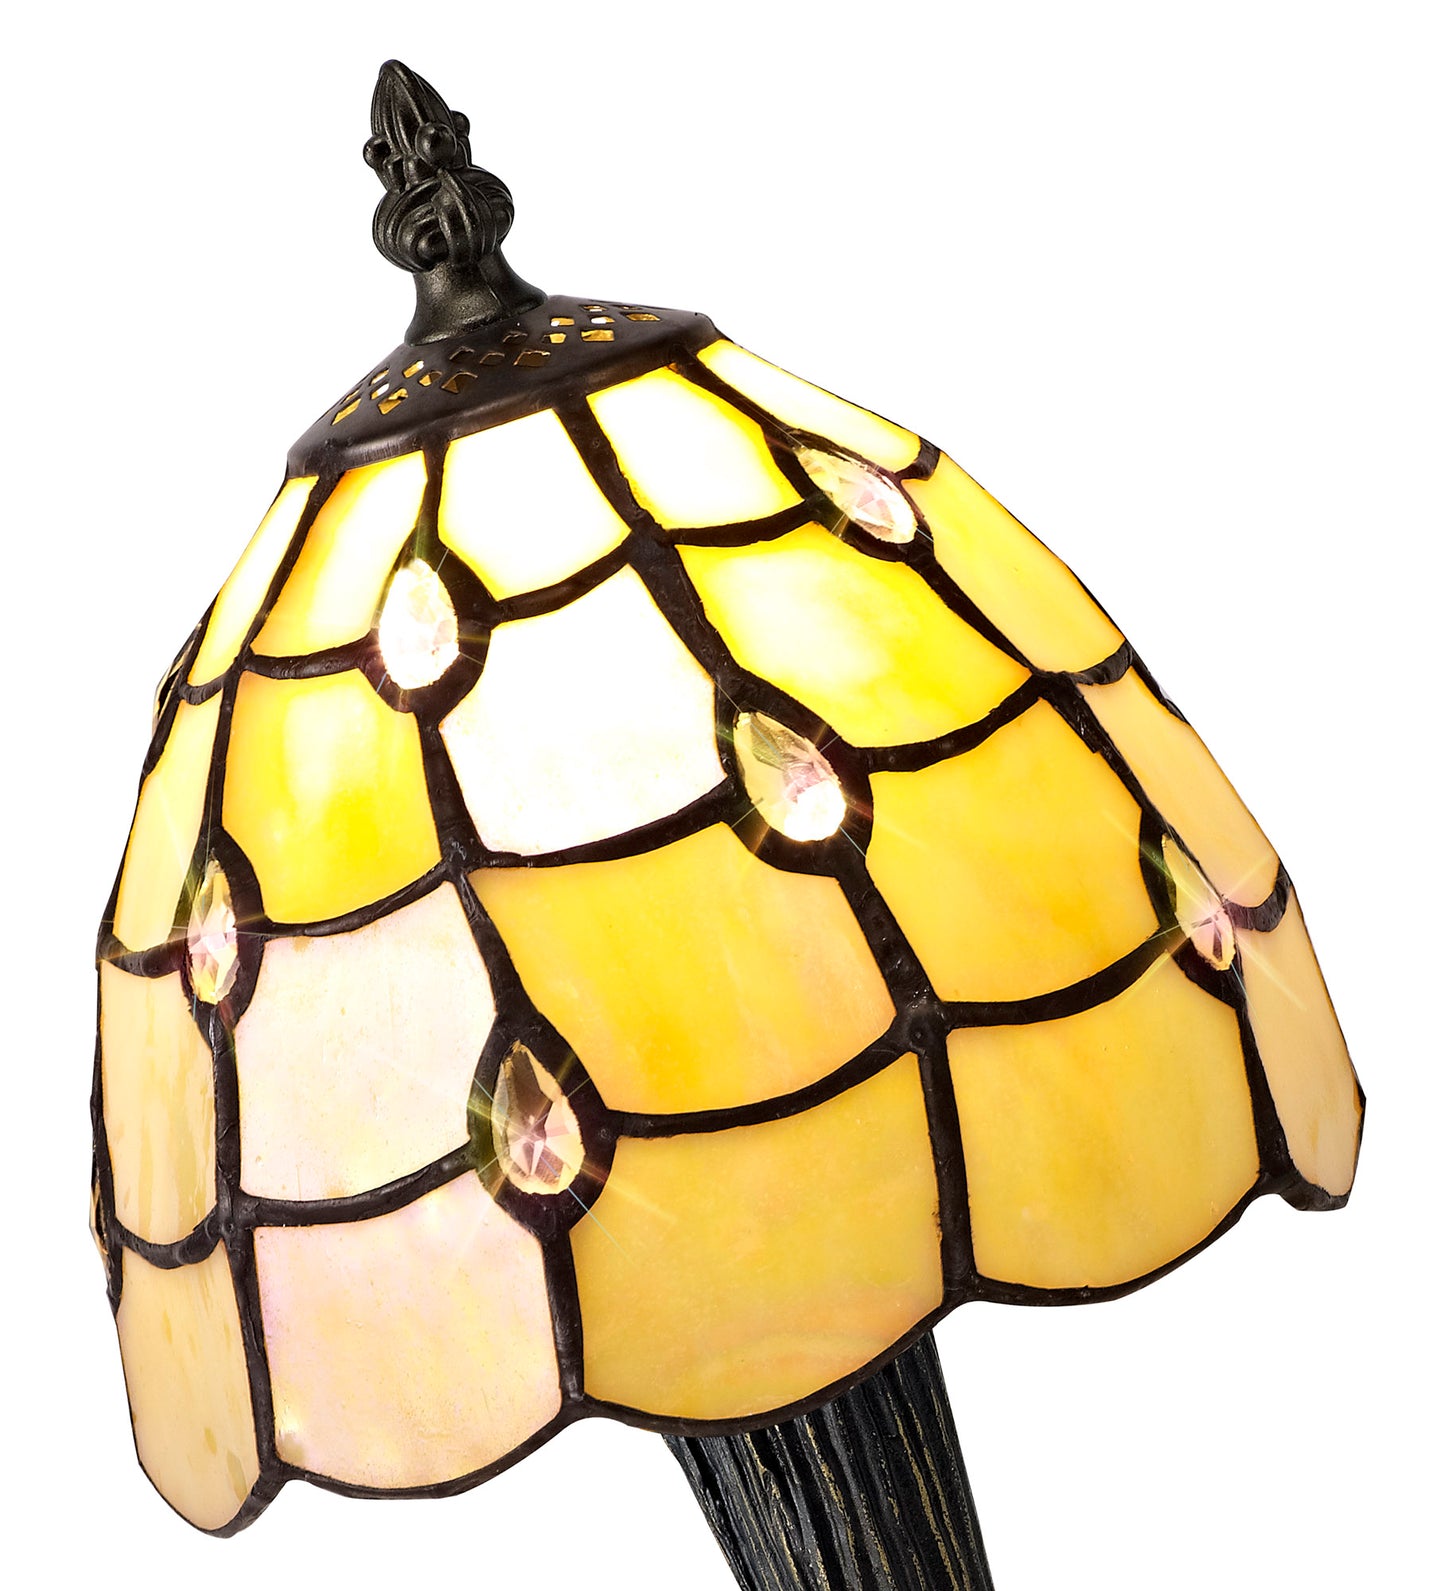 Helena Small Table Lamp